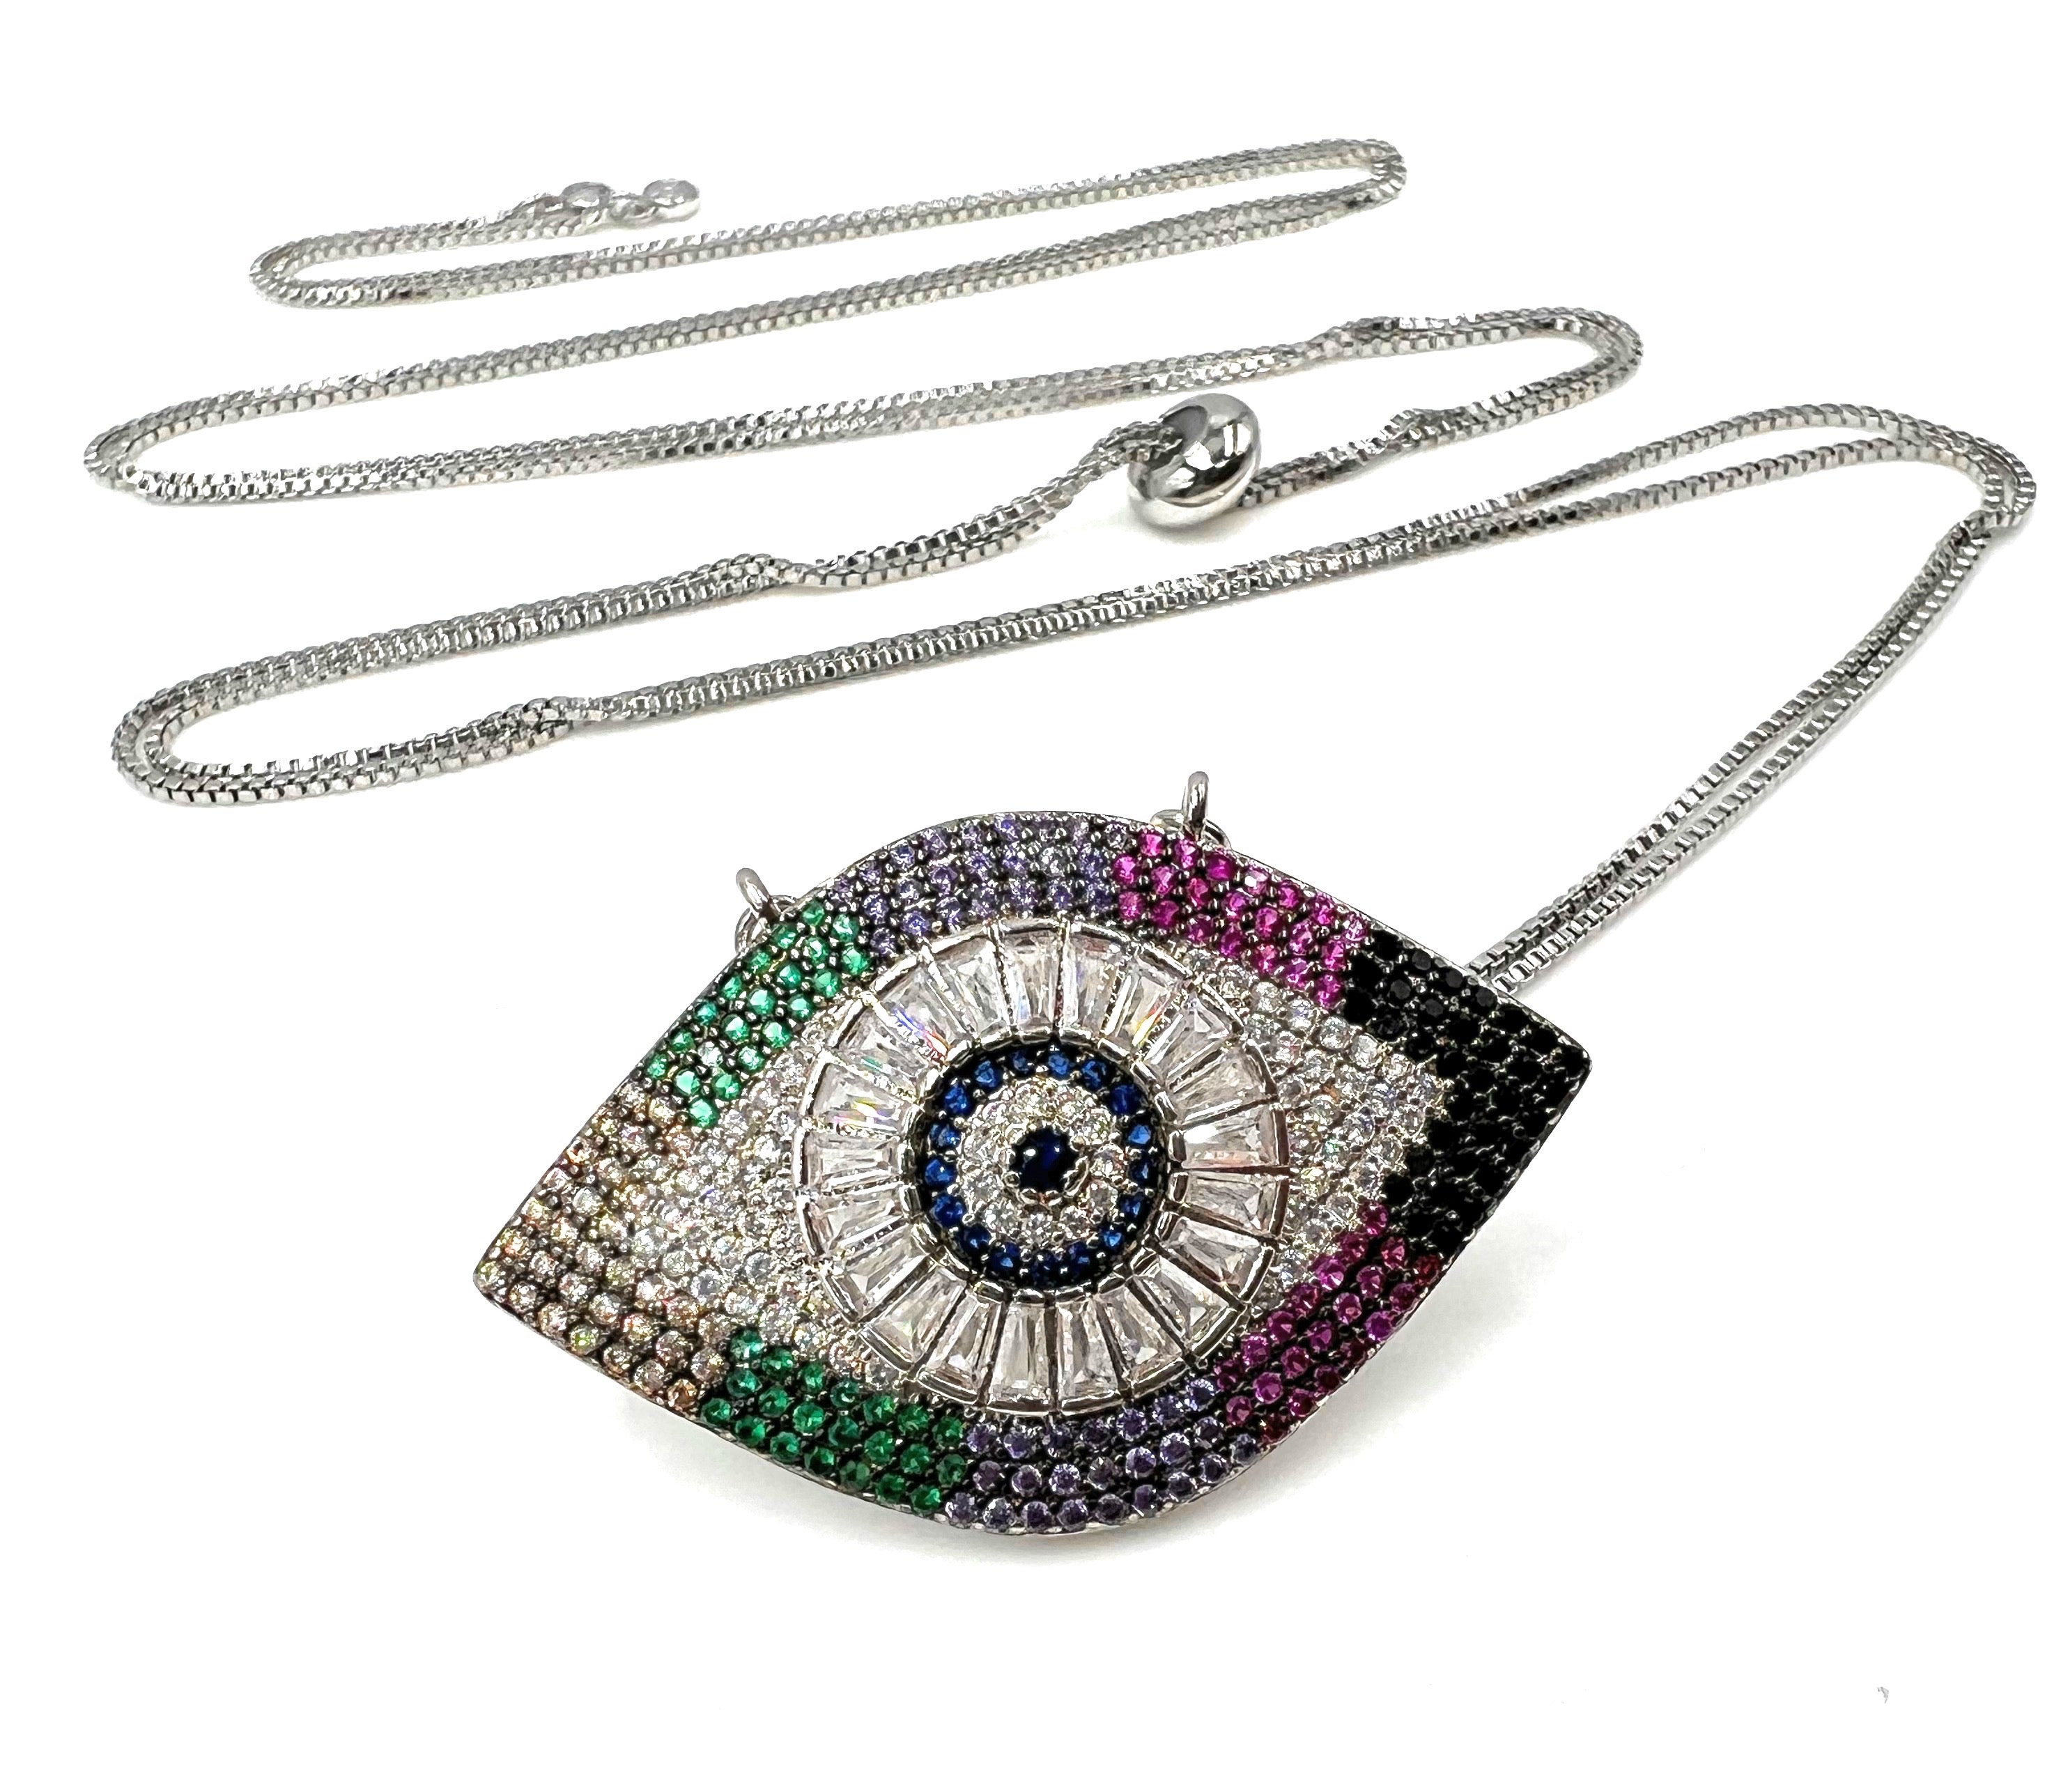 Lariat Evil Eye Necklace Versatile Long Chain